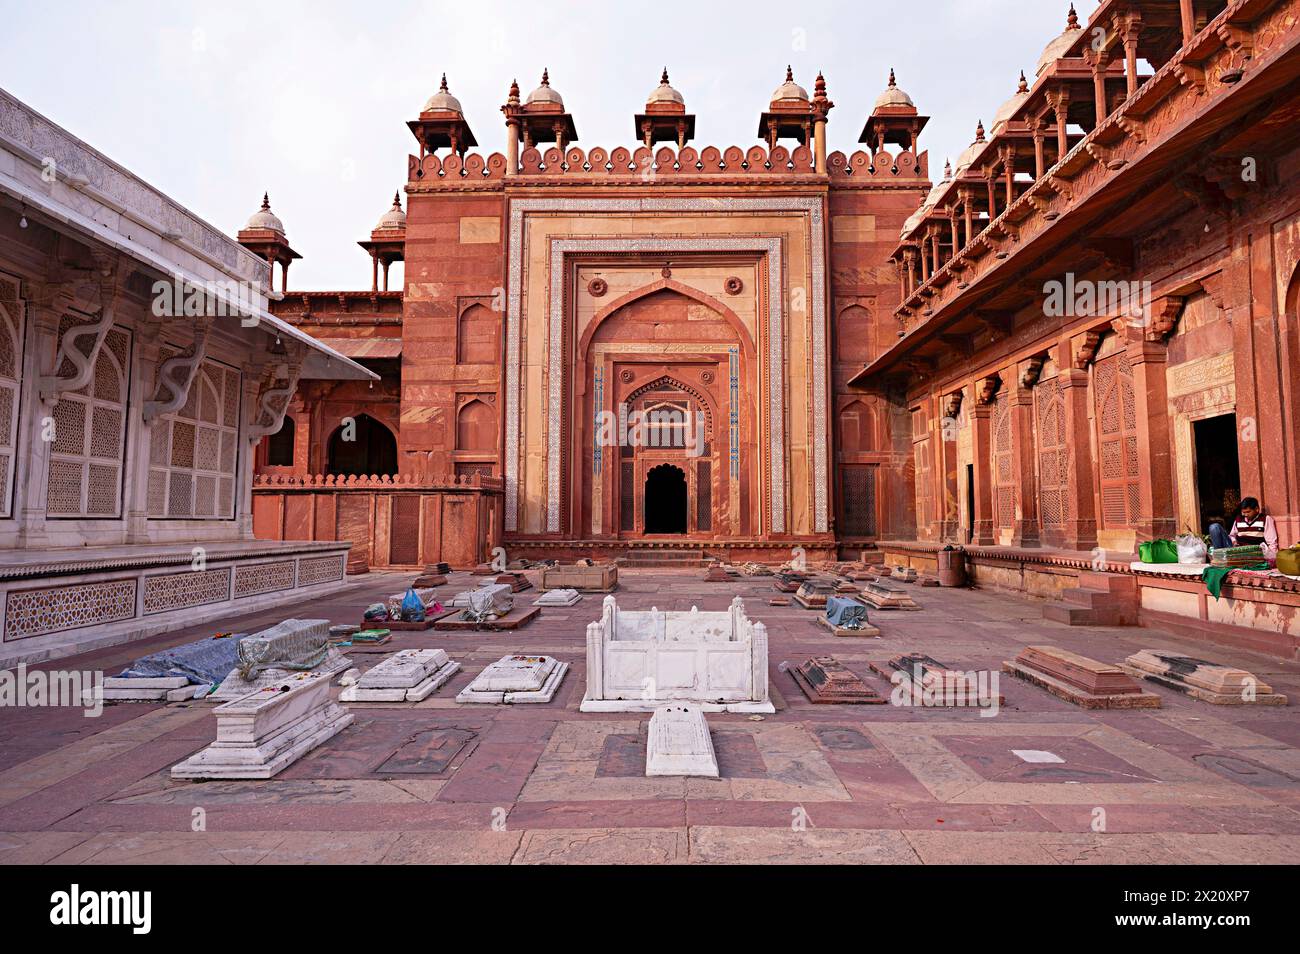 Small shrines and tombs, Jama Masjid courtyard, Fatehpur Sikri, Uttar Pradesh, India Stock Photo